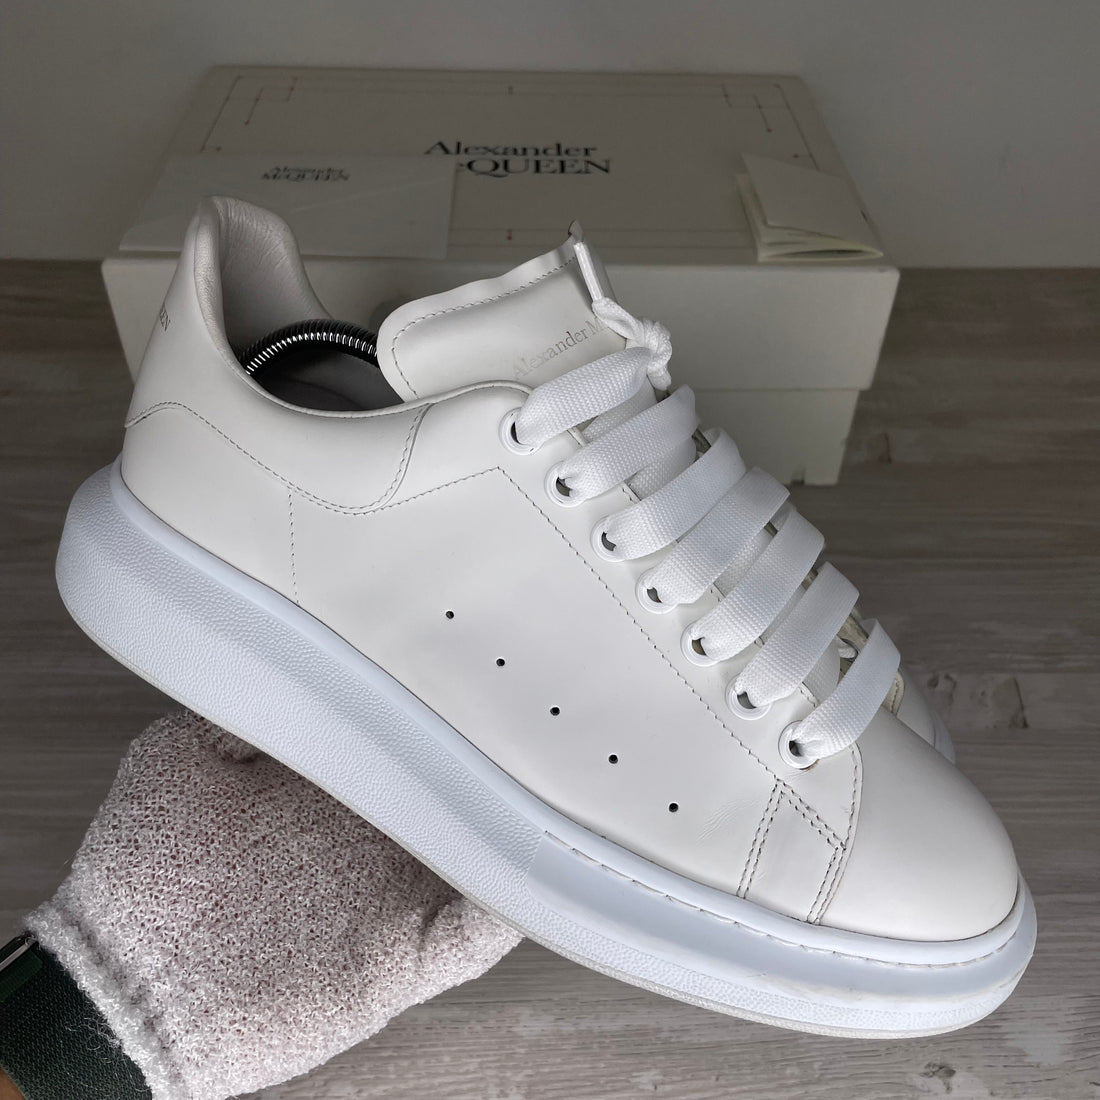 Bærbar Fuld Legitim Alexander McQueen Sneakers, 'White Leather' Oversized (43) – DelsouX  Universe